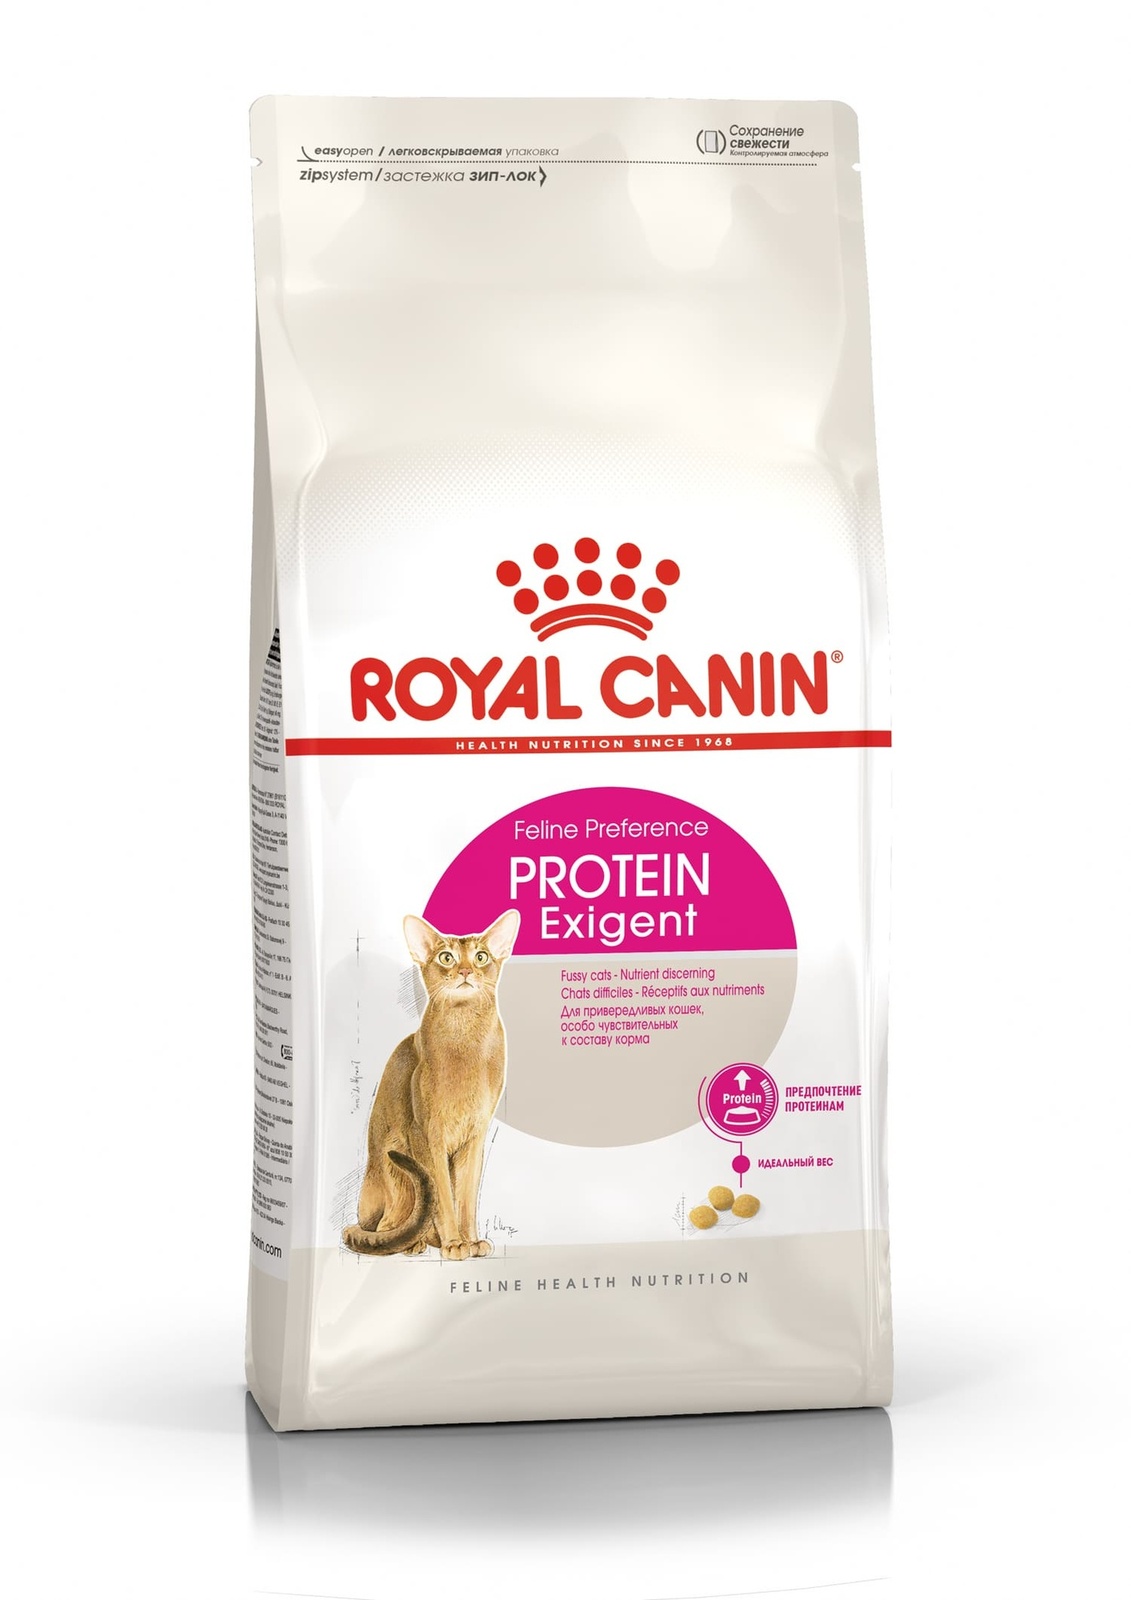 Royal Canin Корм Royal Canin для кошек привередливых в питании (1-12 лет) (10 кг) royal canin корм royal canin для кошек привередливых в питании 1 12 лет 10 кг